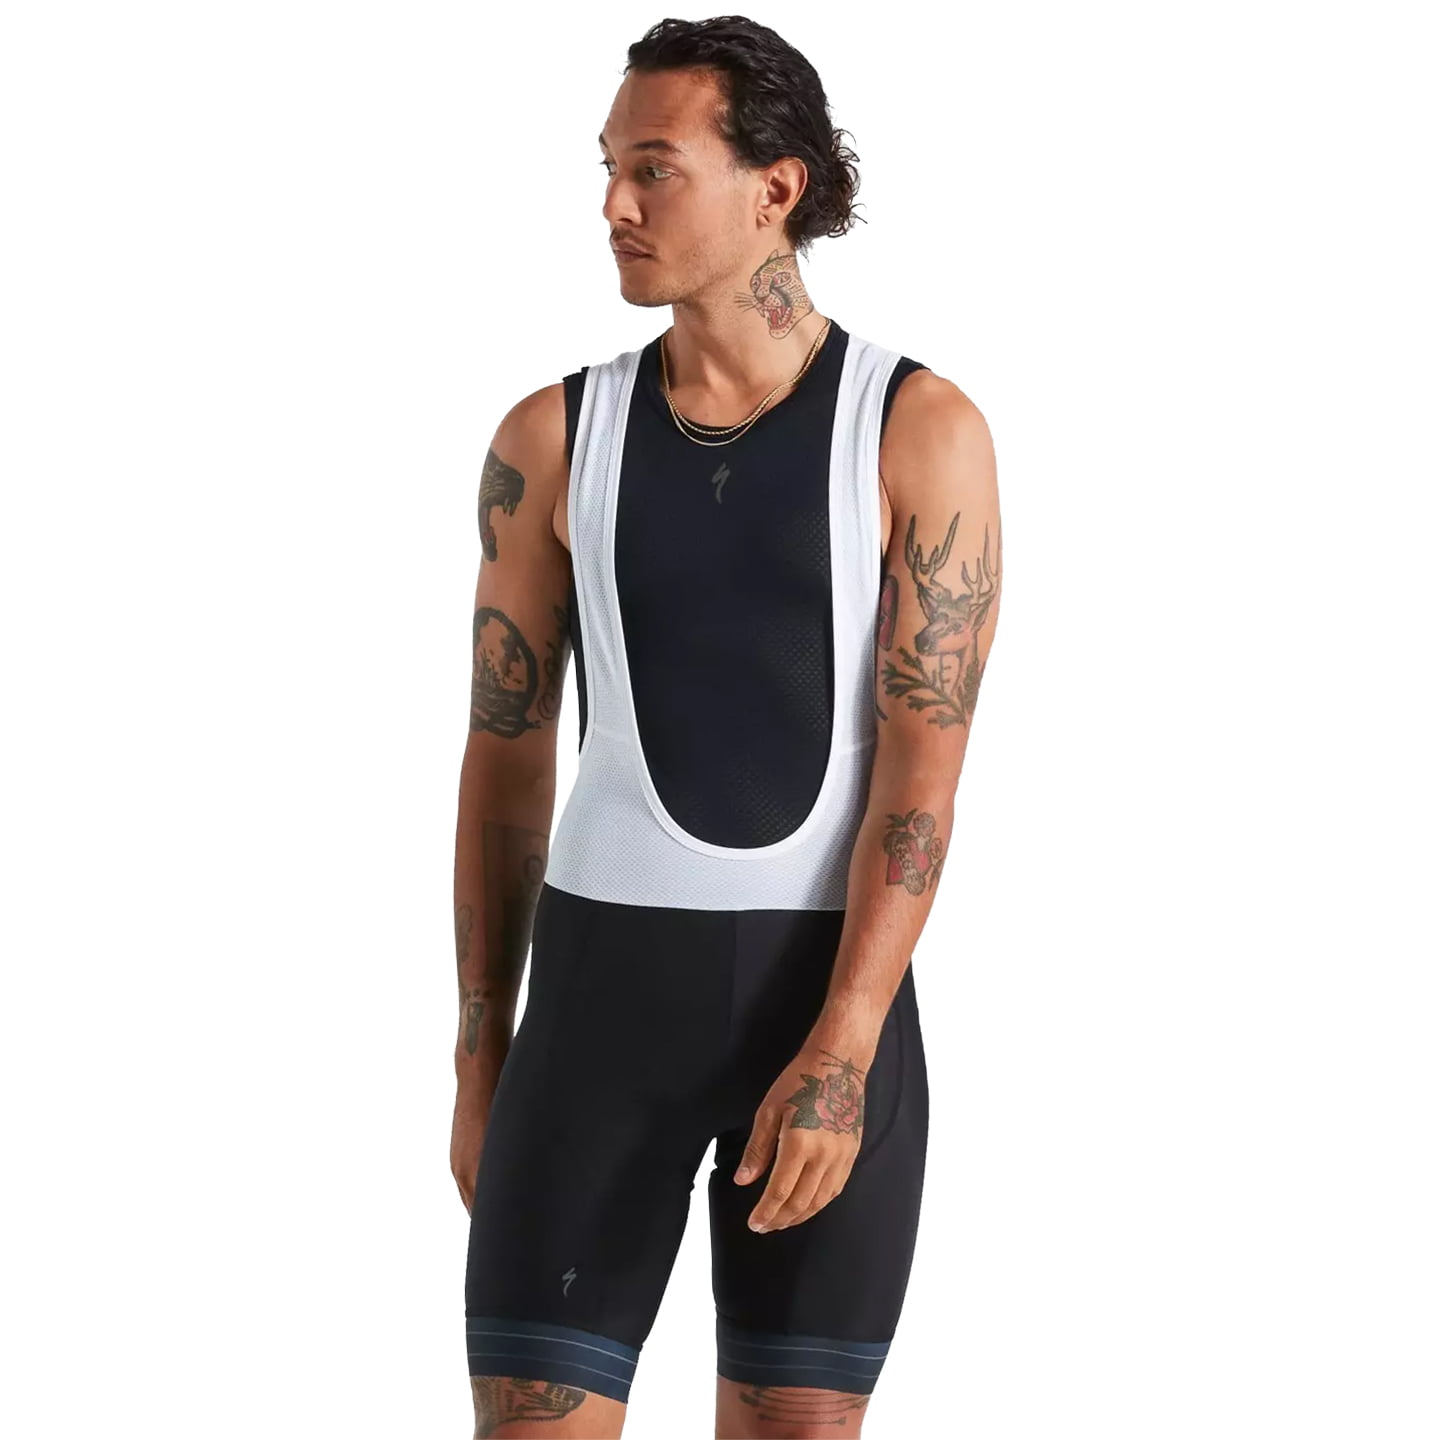 SPECIALIZED RBX Mirage Bib Shorts Bib Shorts, for men, size XL, Cycle shorts, Cycling clothing